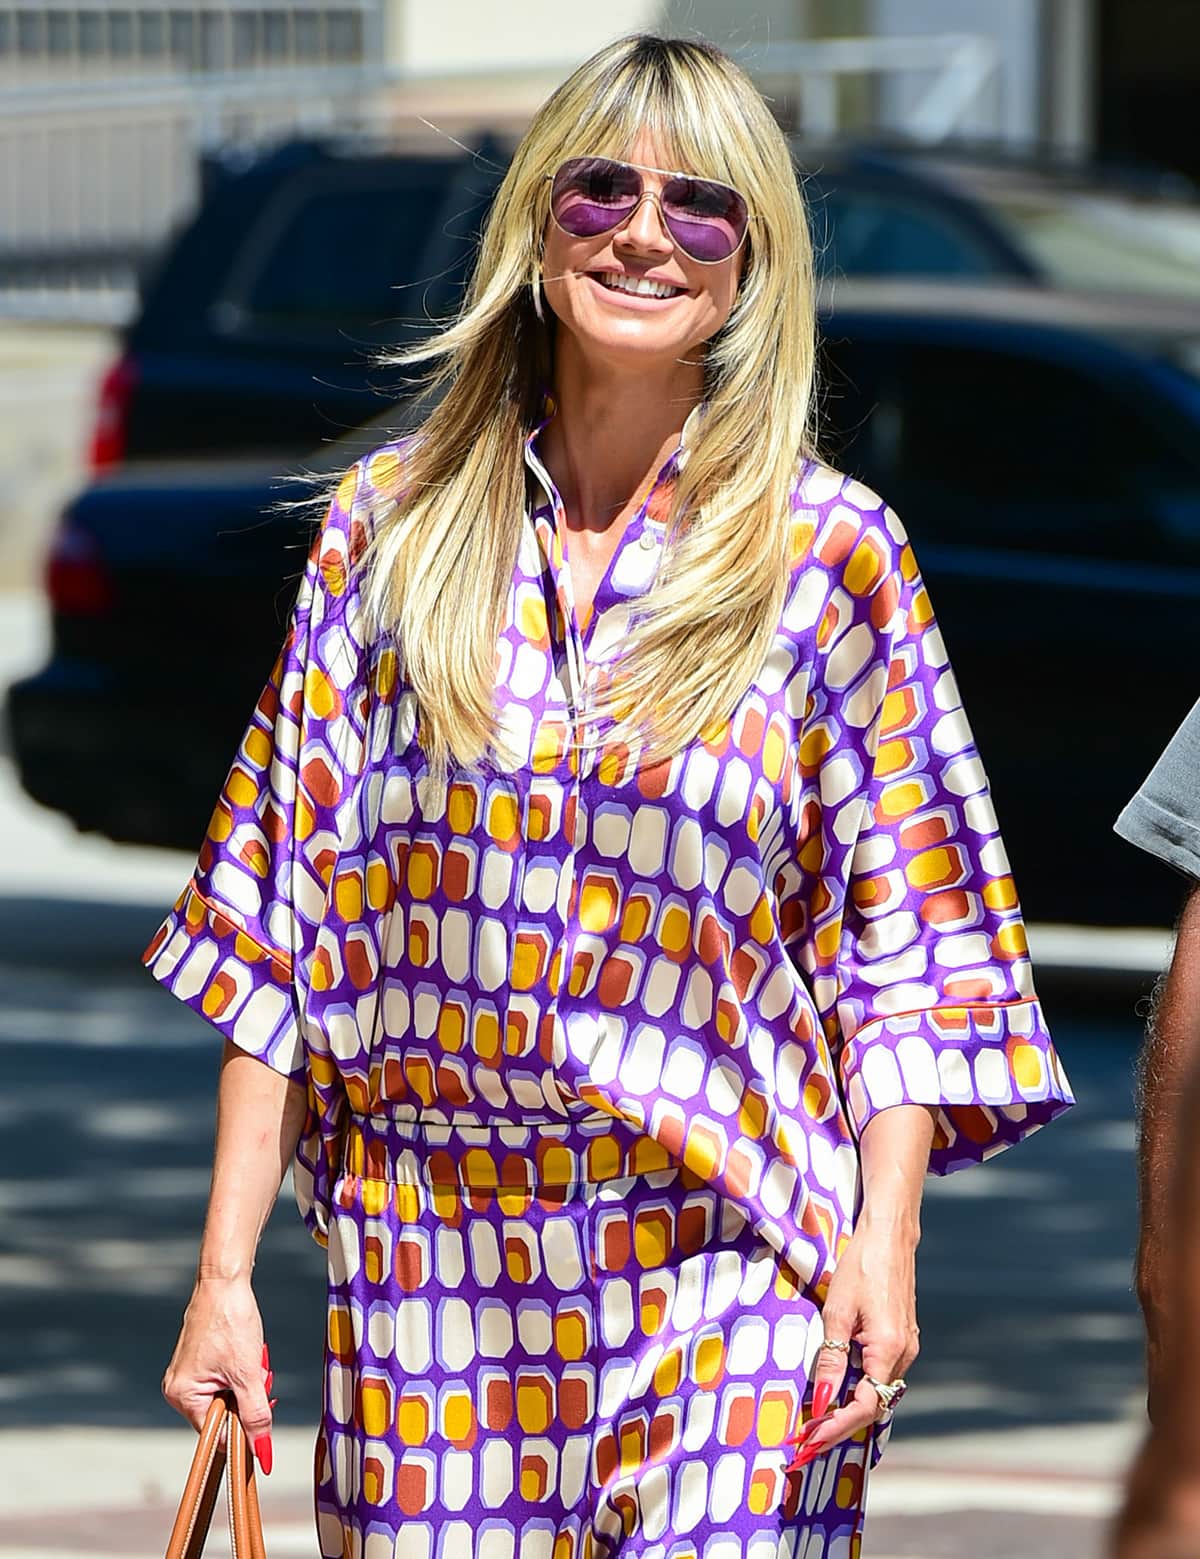 Heidi Klum keeps her look cohesive by wearing purple aviators and carrying a tan Hermes Birkin bag